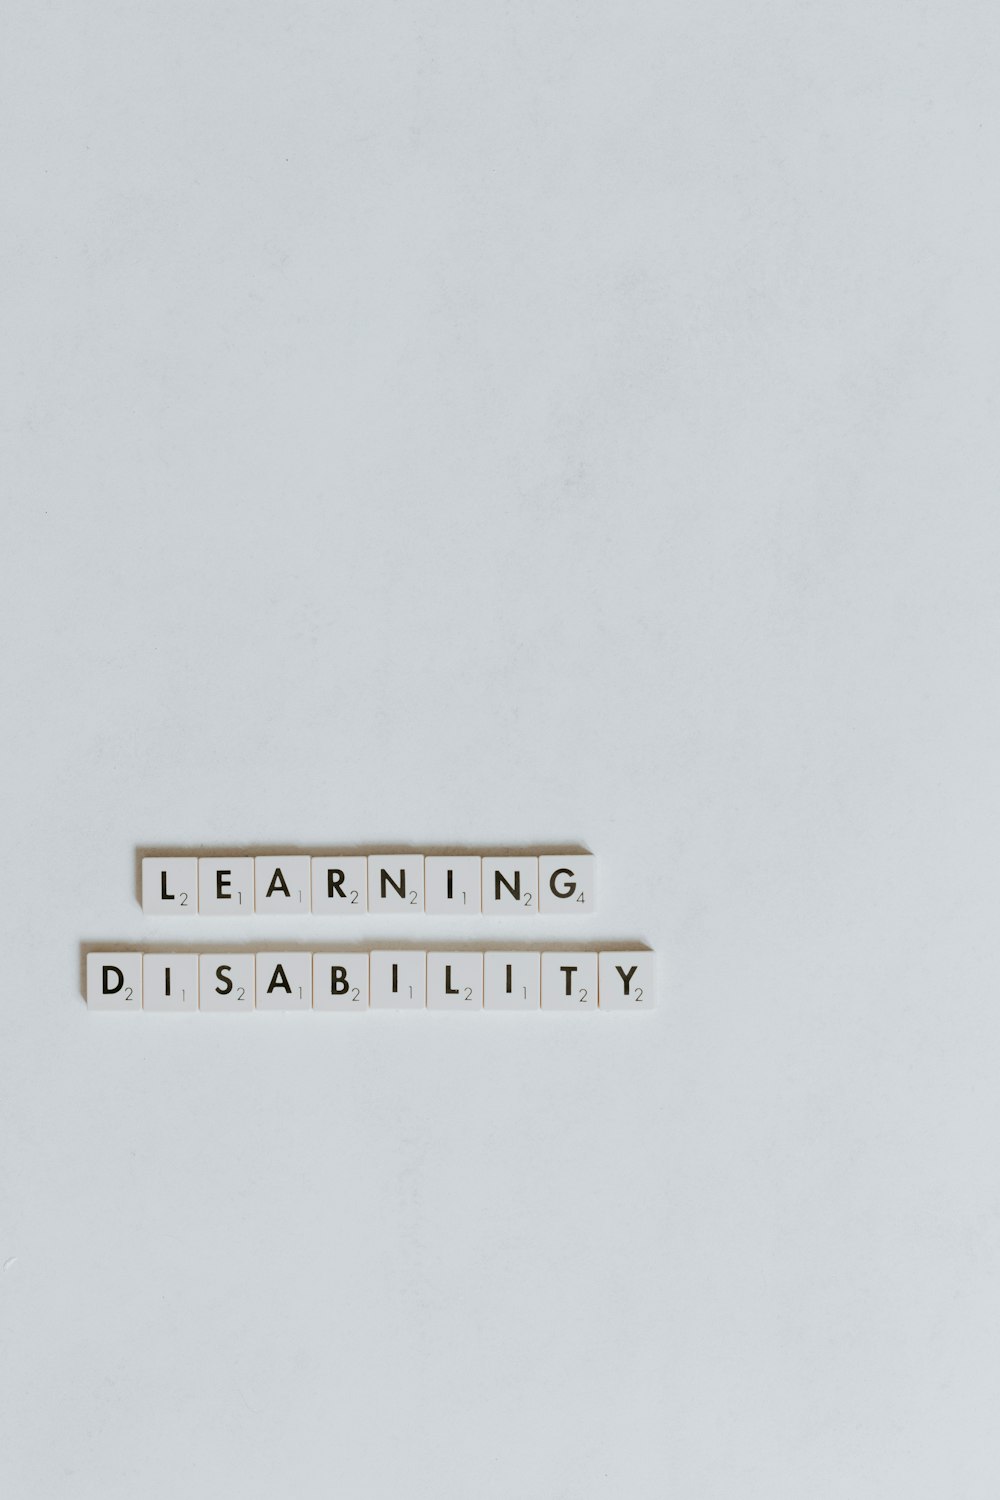 Learning Disability written on white blocks